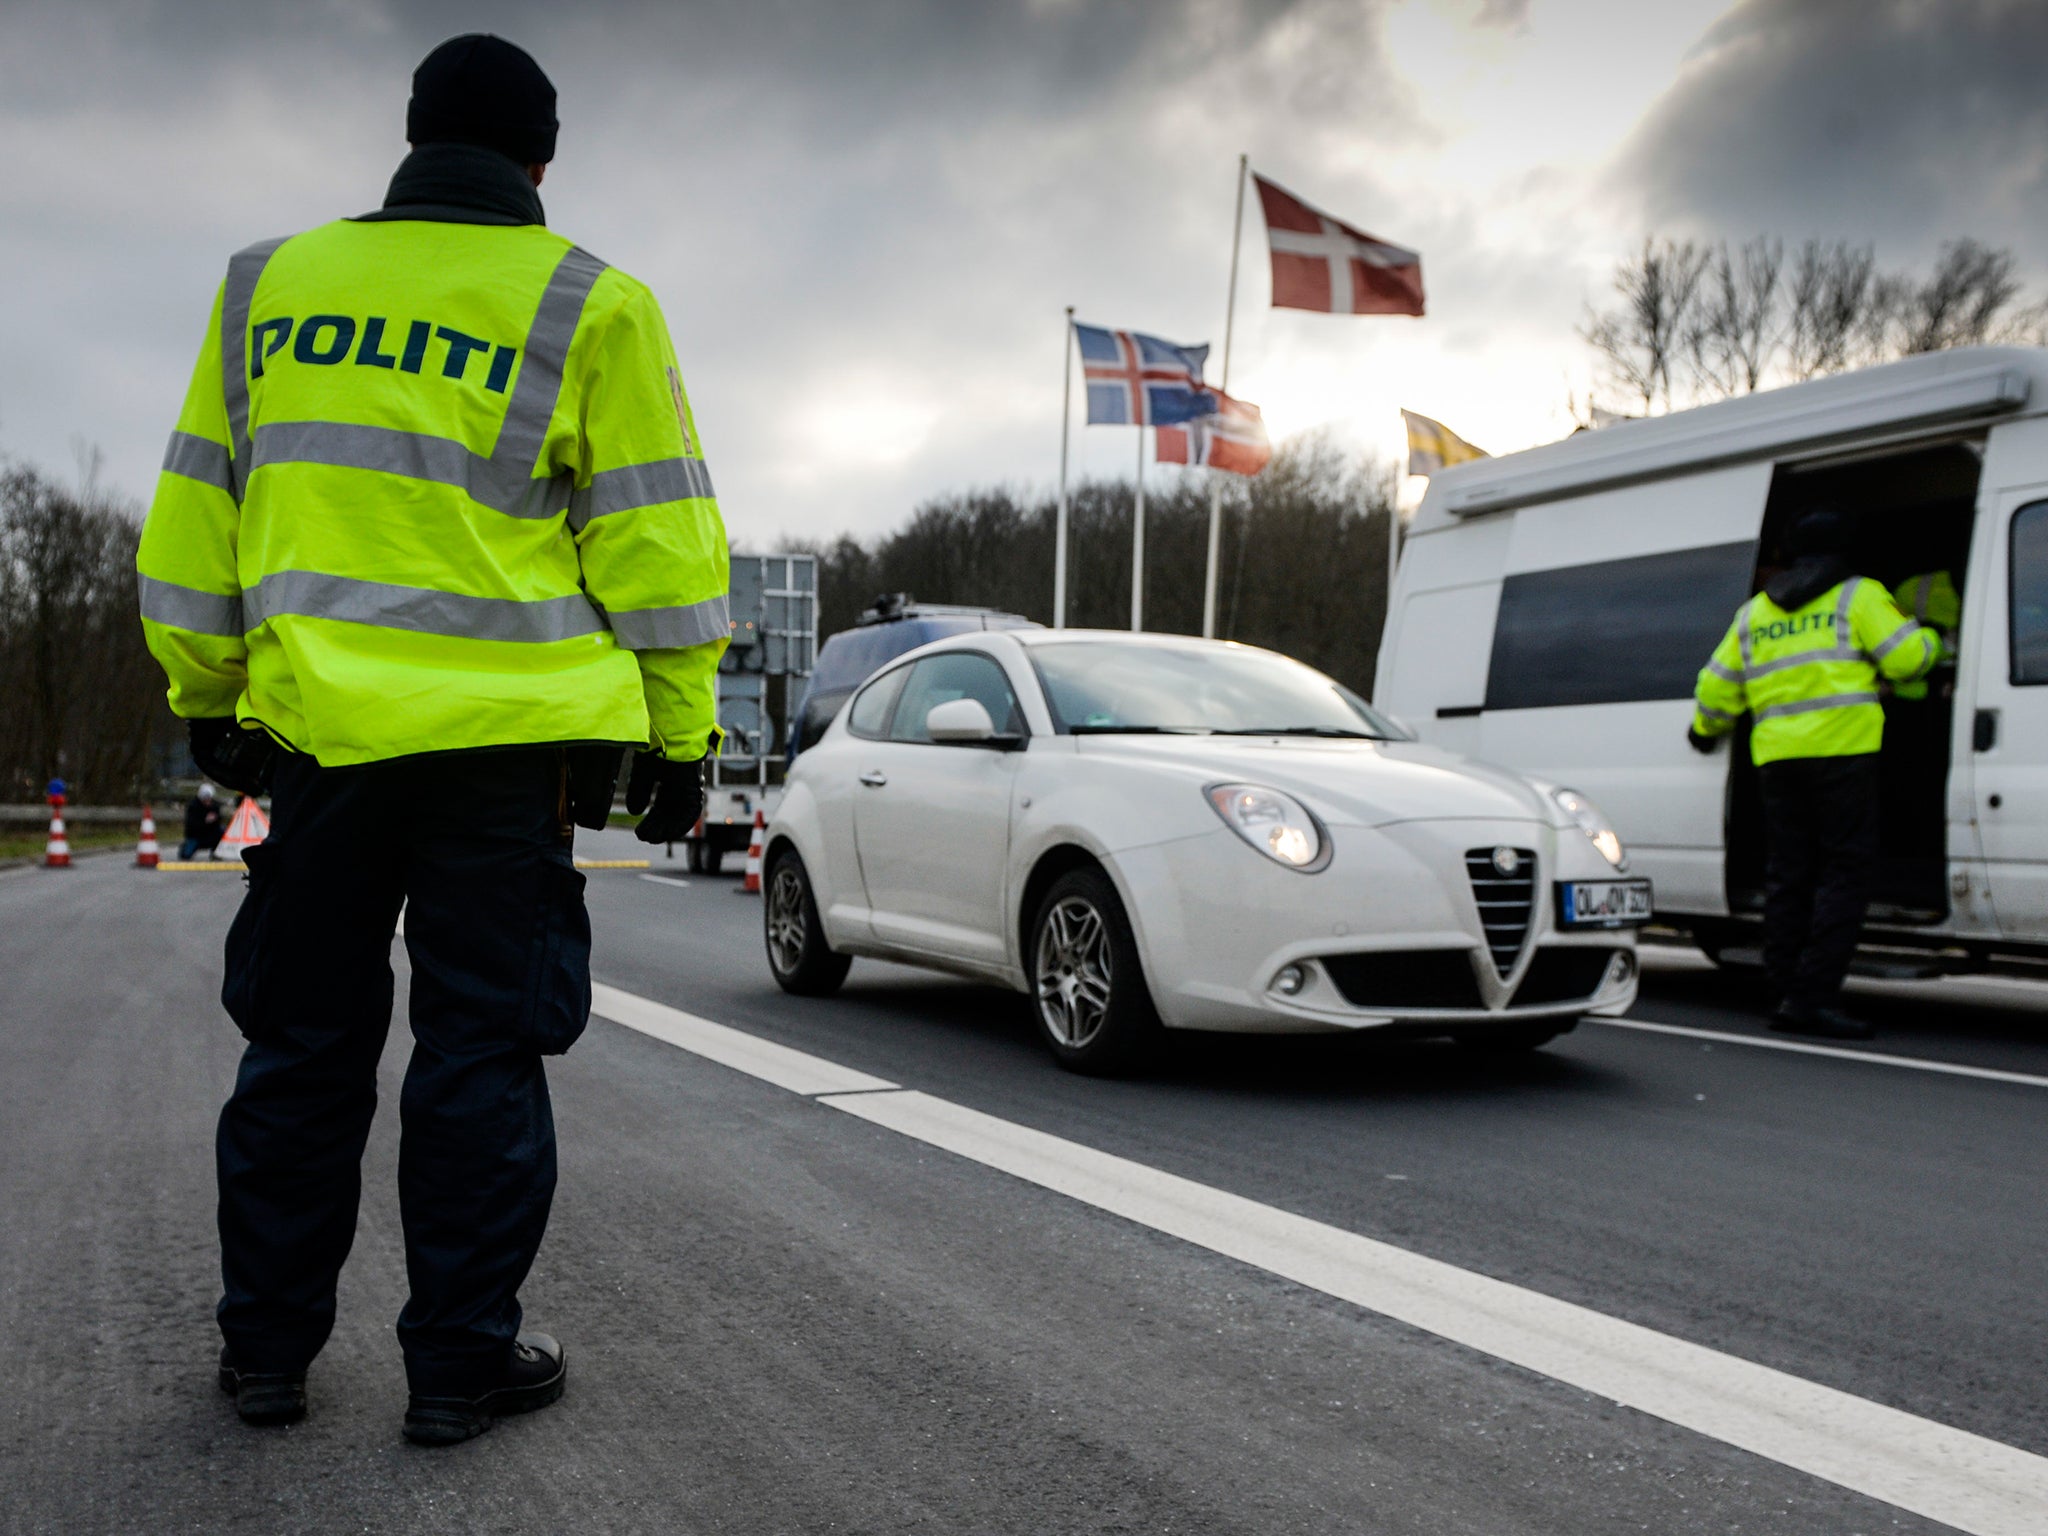 Denmark has taken the decision to tighten its border controls